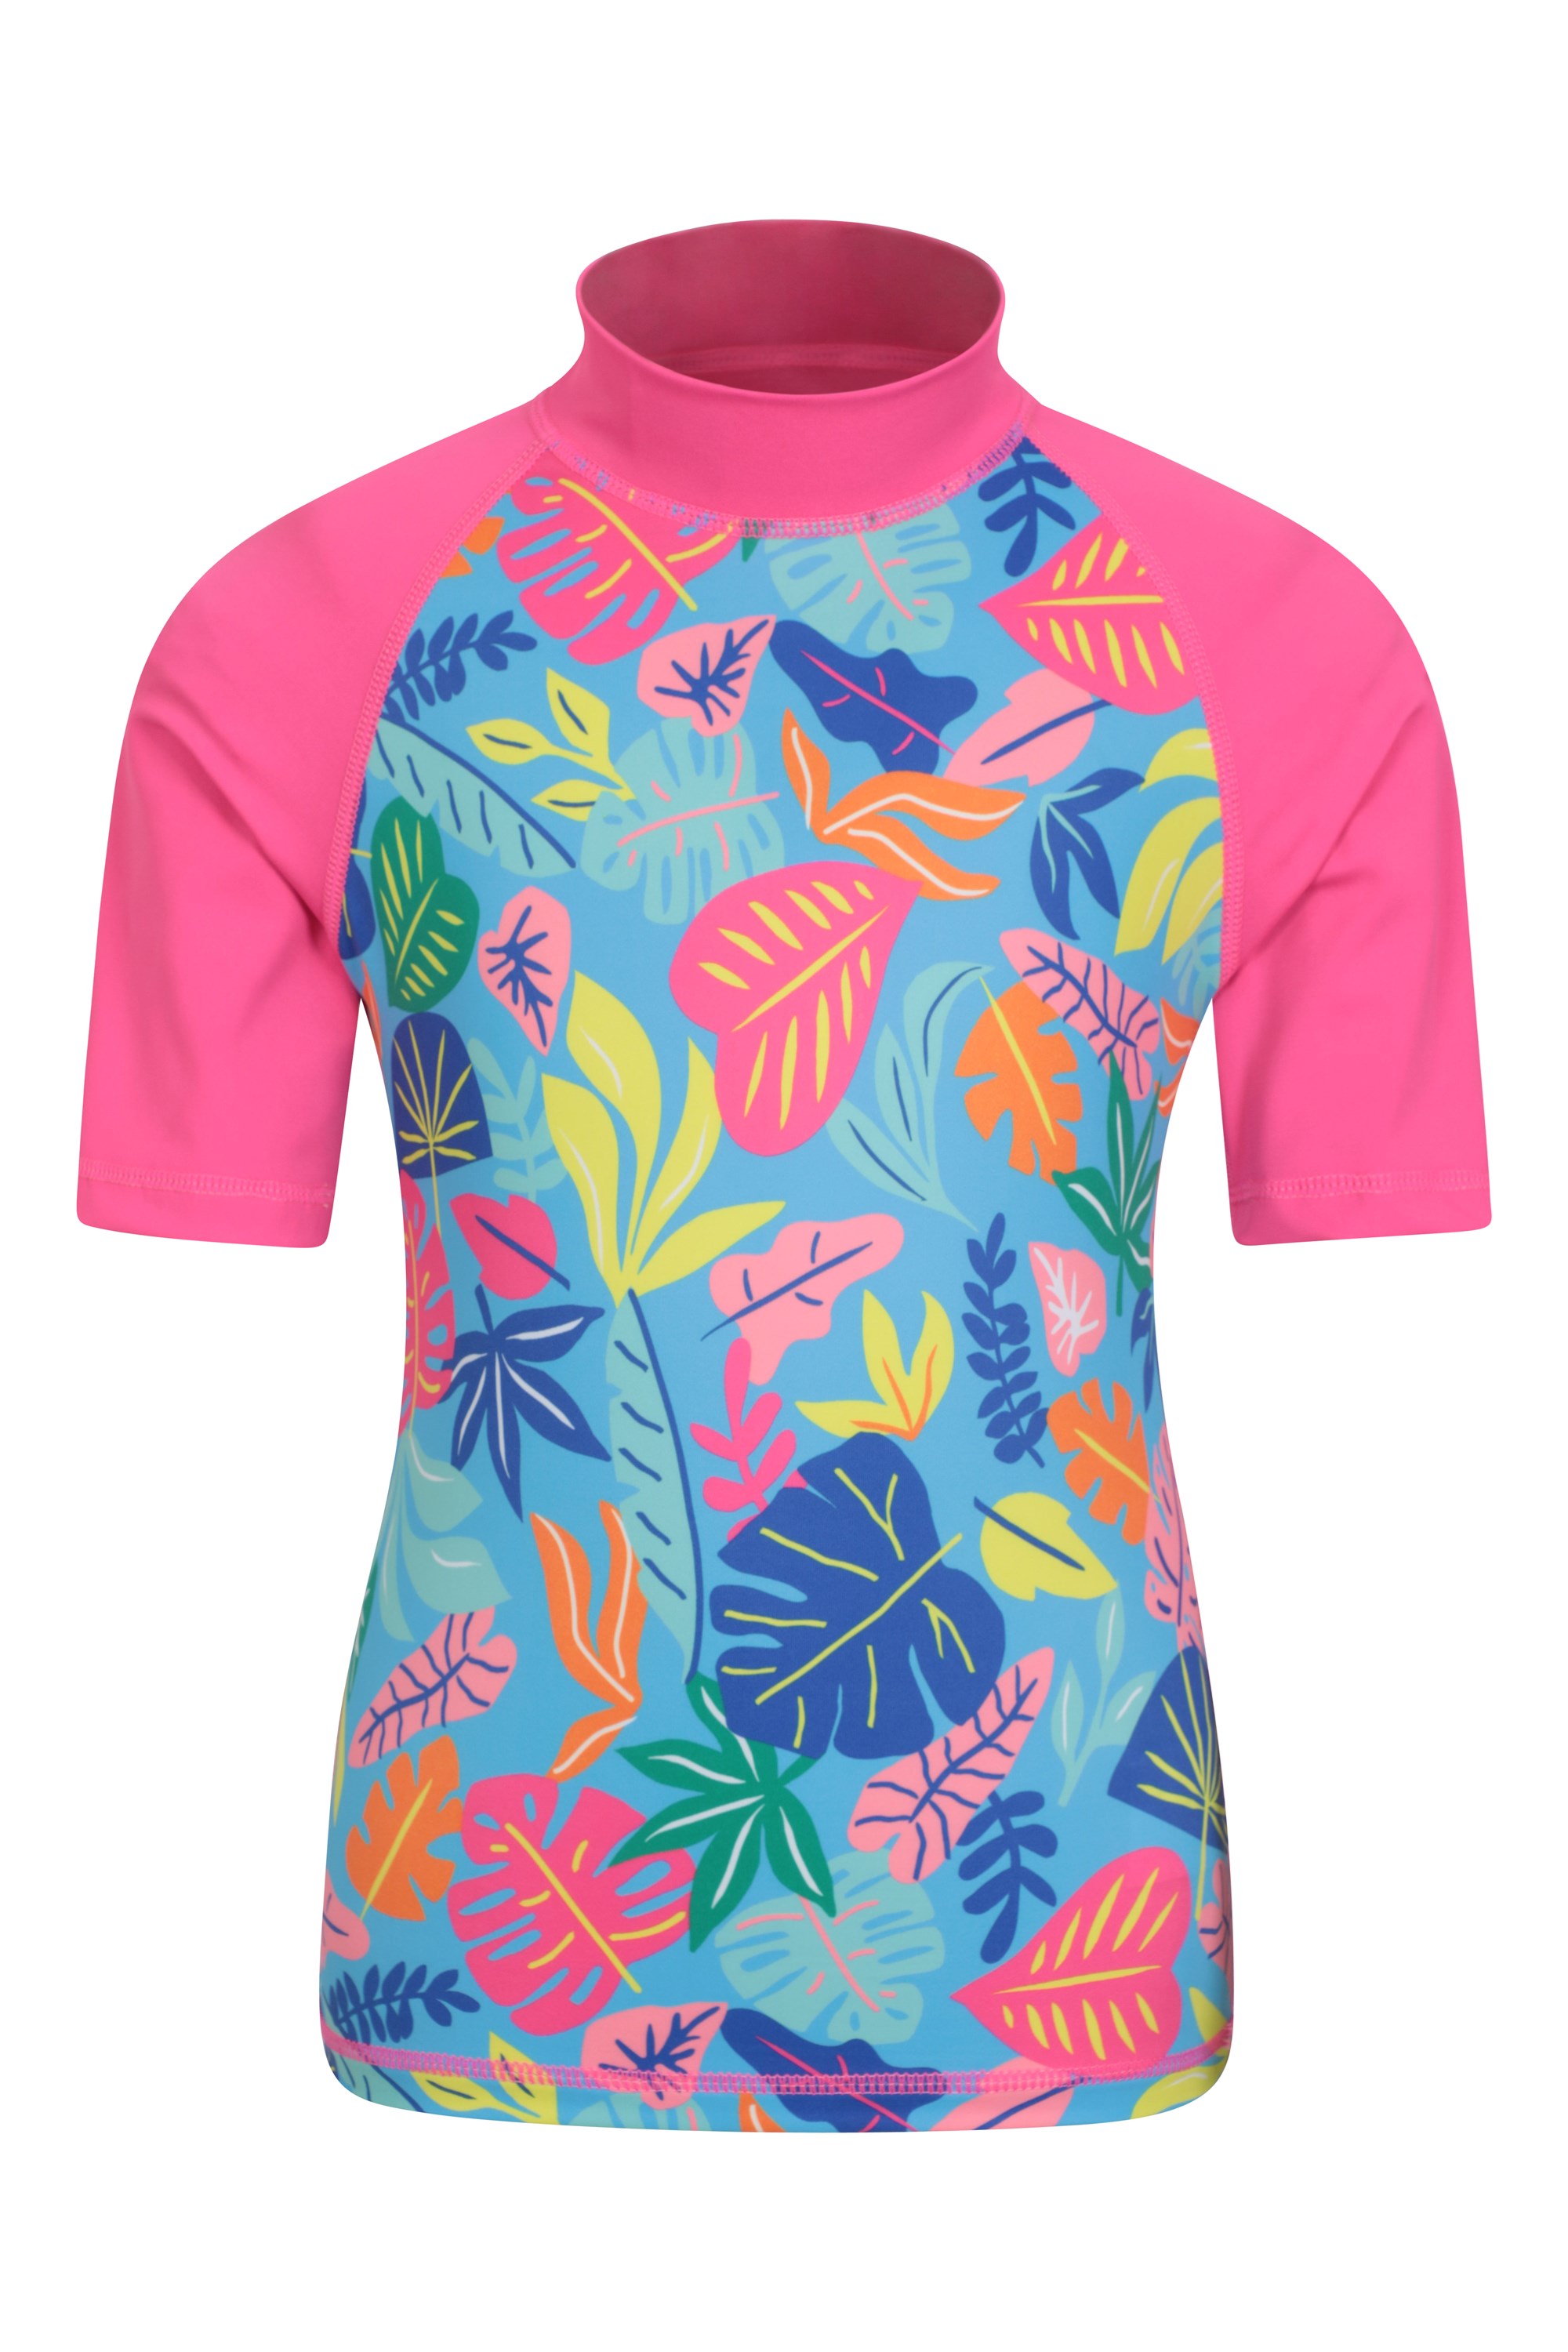 LACOFIA Baby Boys Girls Short Sleeve Rash Vest Toddler Swim Tops Kids Quick Dry UPF50 UV Protection Rashguard Shirt 